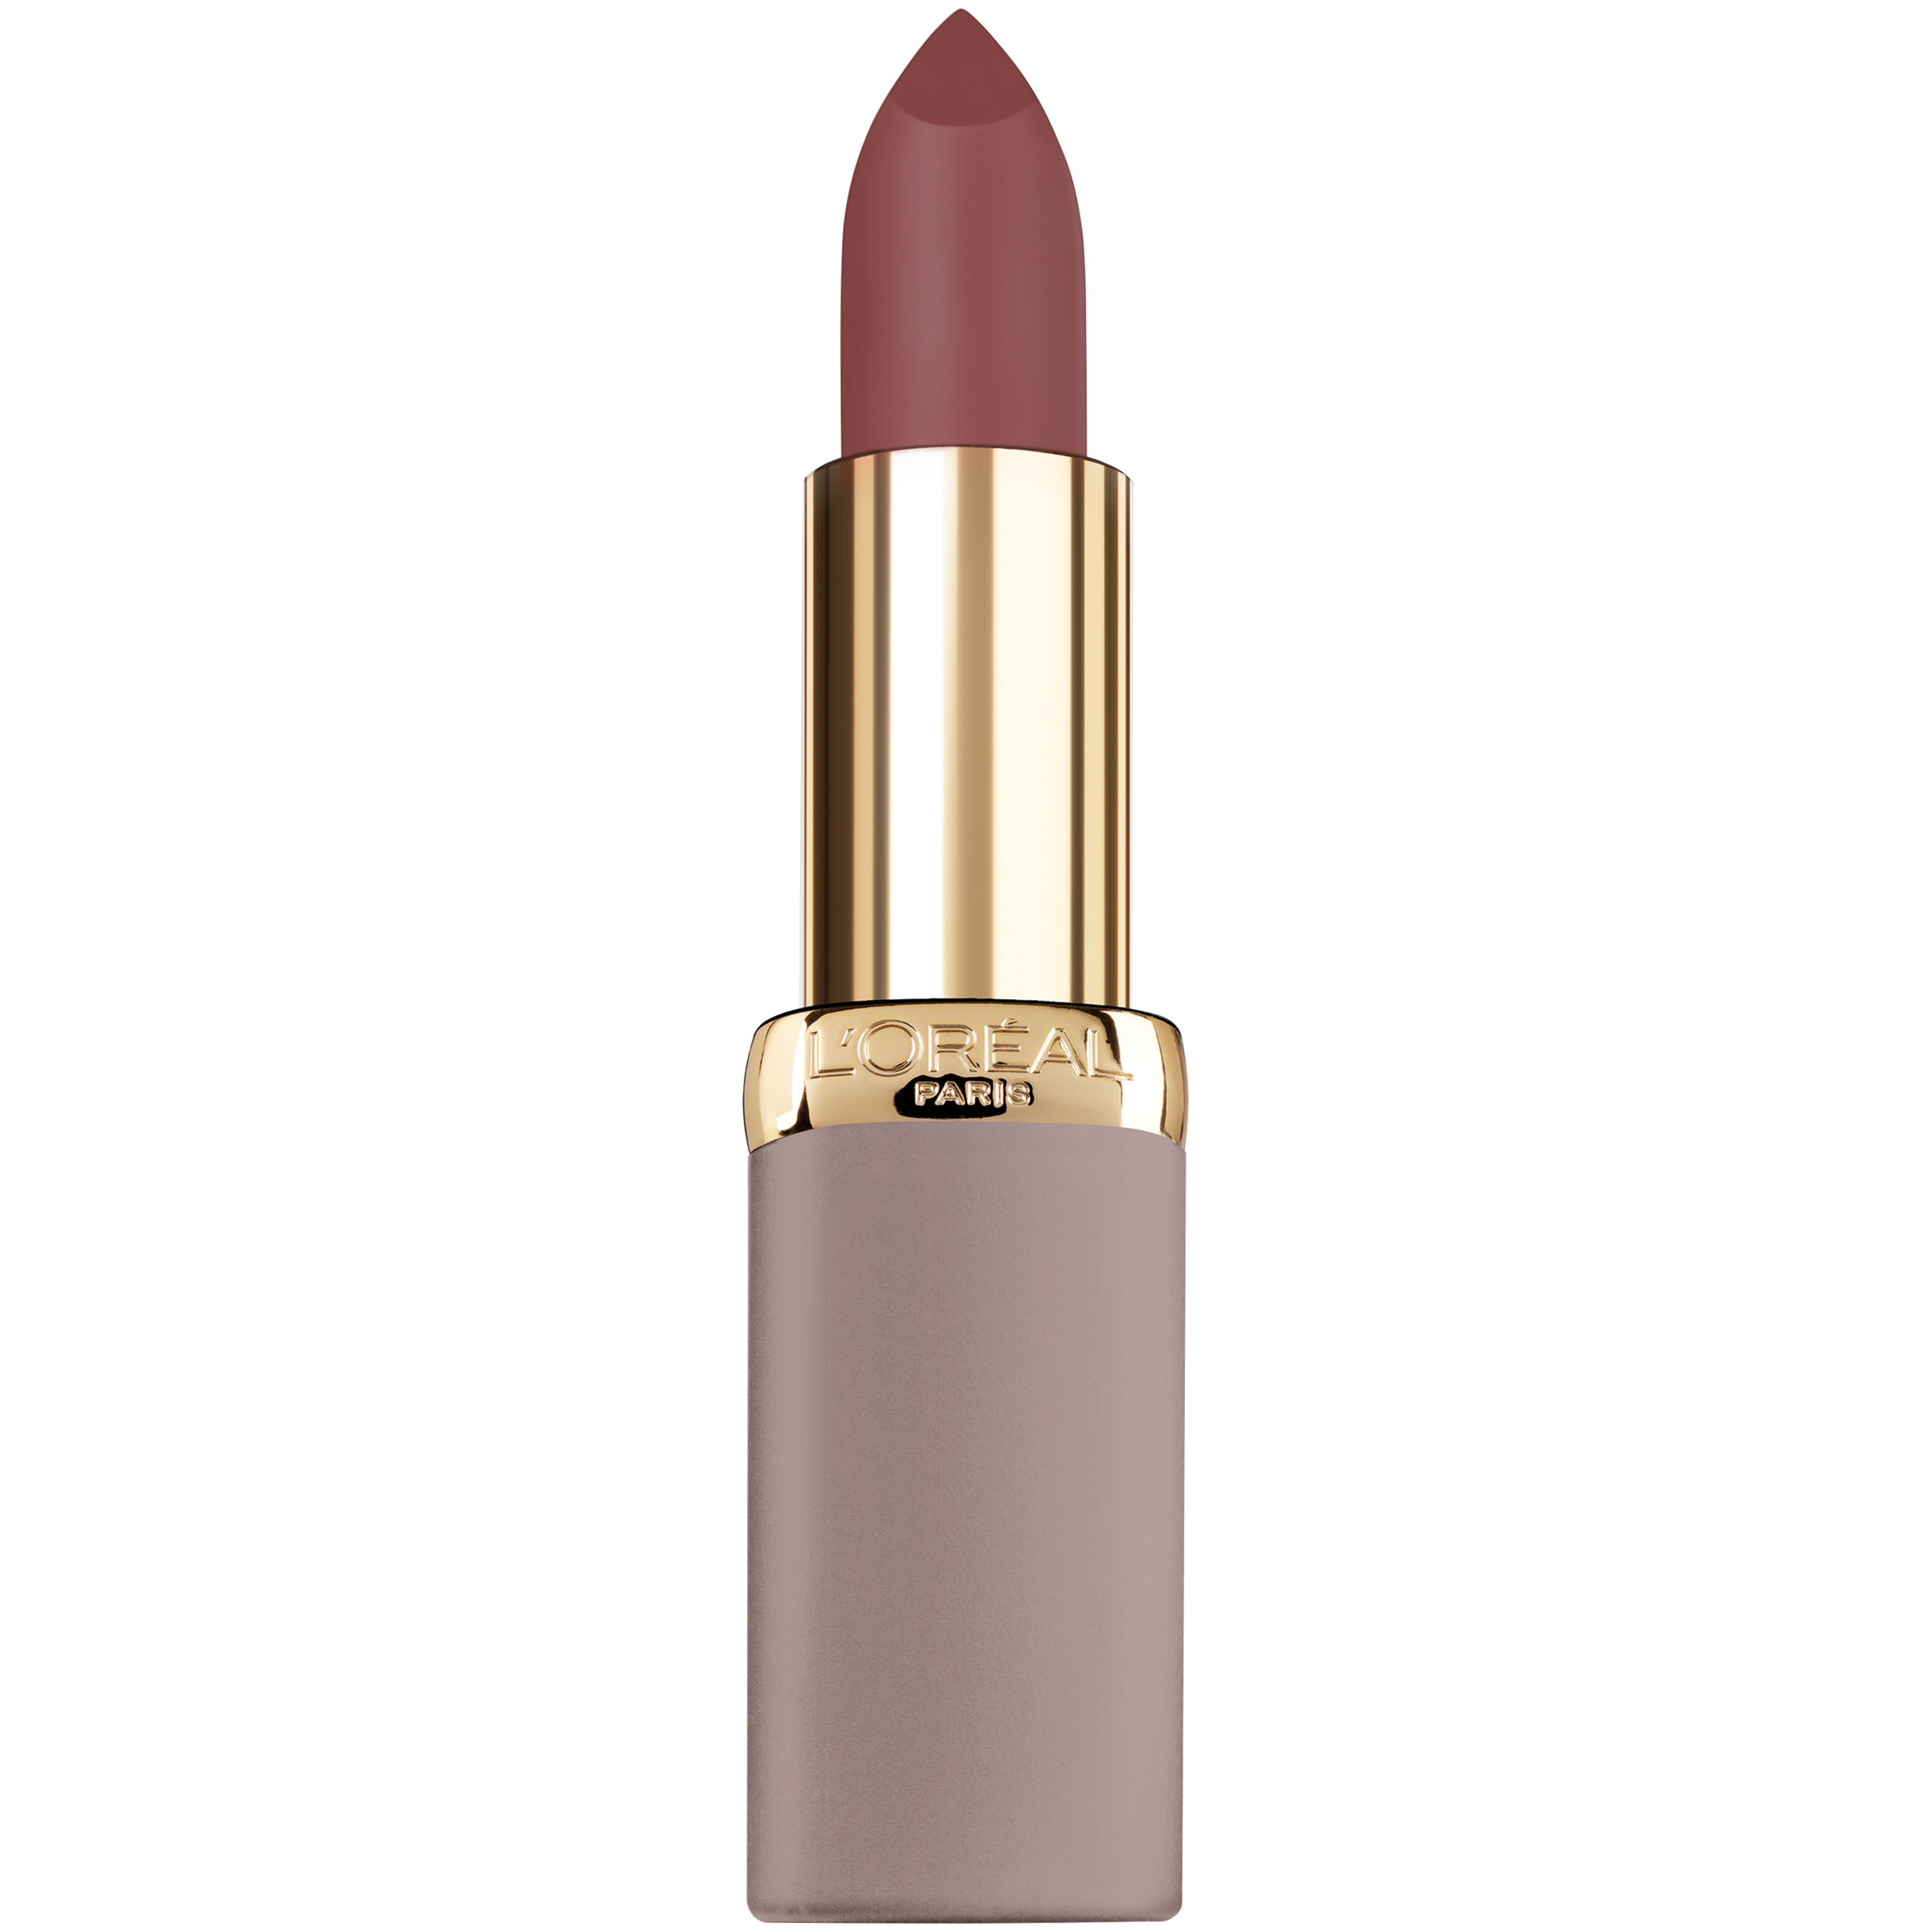 L'Oreal Paris Colour Riche Ultra Matte Highly Pigmented Nude Lipstick, Bold Mauve, 0.13 oz. - image 1 of 5